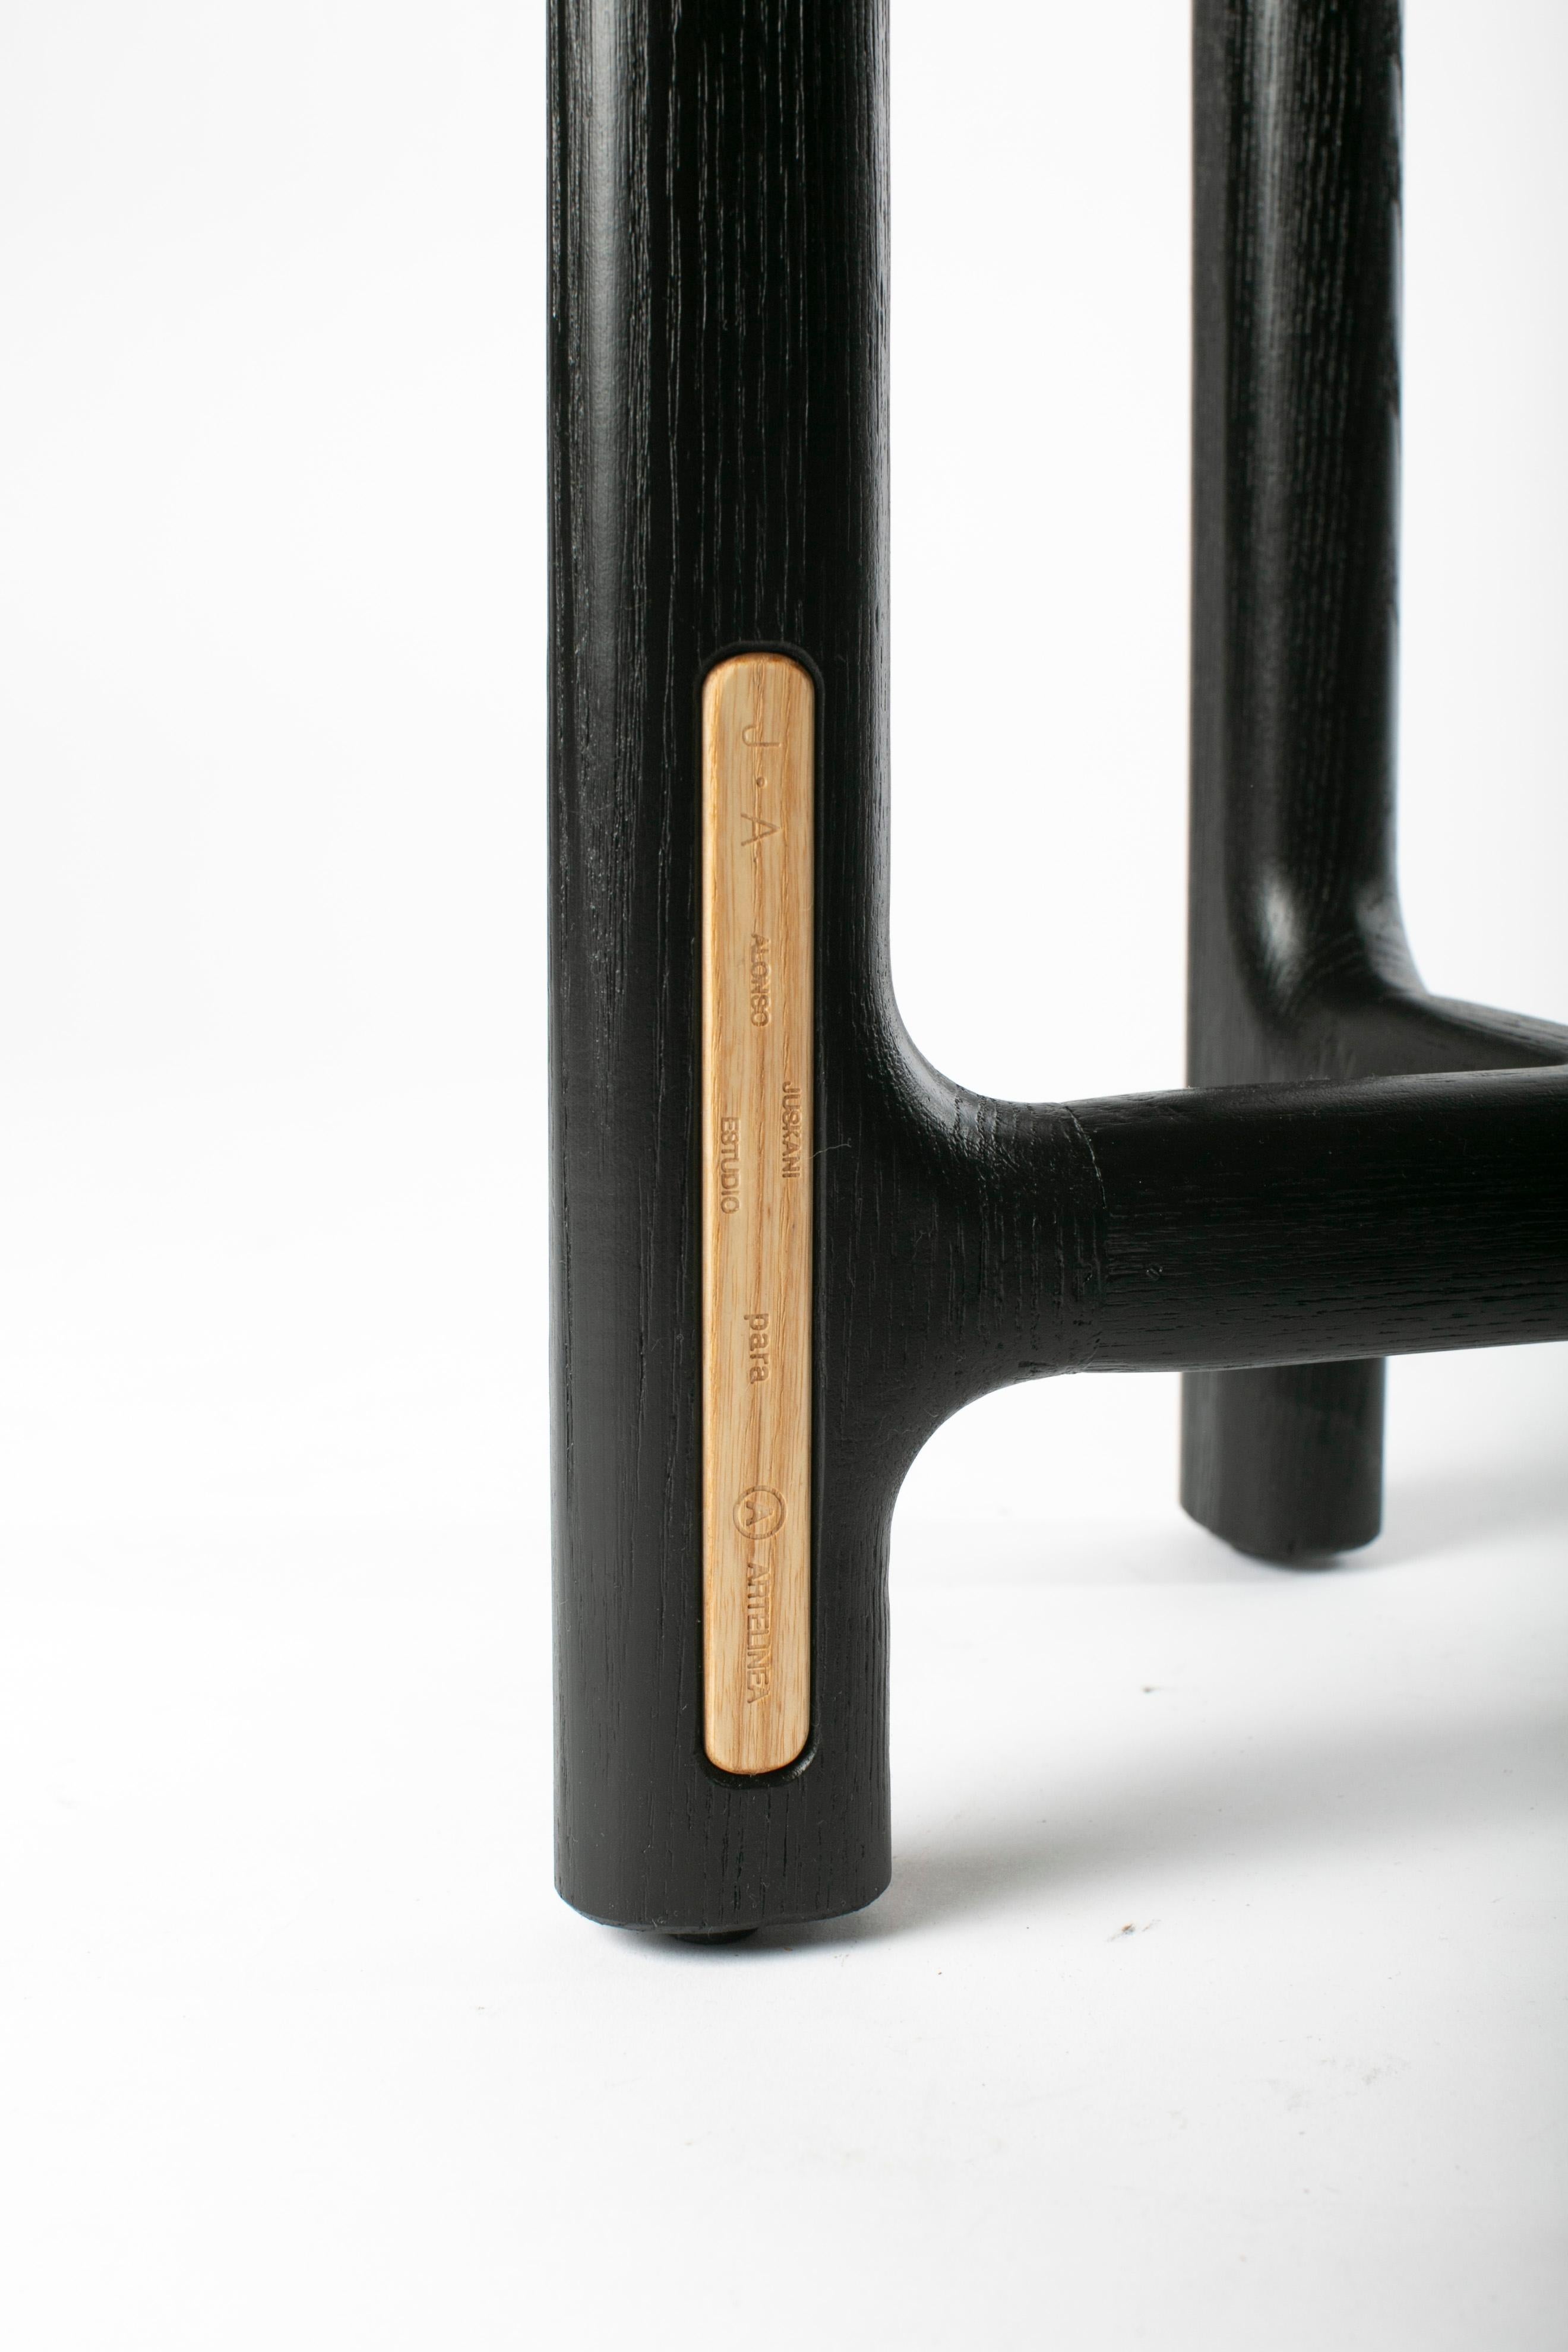 Desierto 120, Black Ash Coat Stand, Contemporary Mexican Design In New Condition For Sale In Mexico City, MX